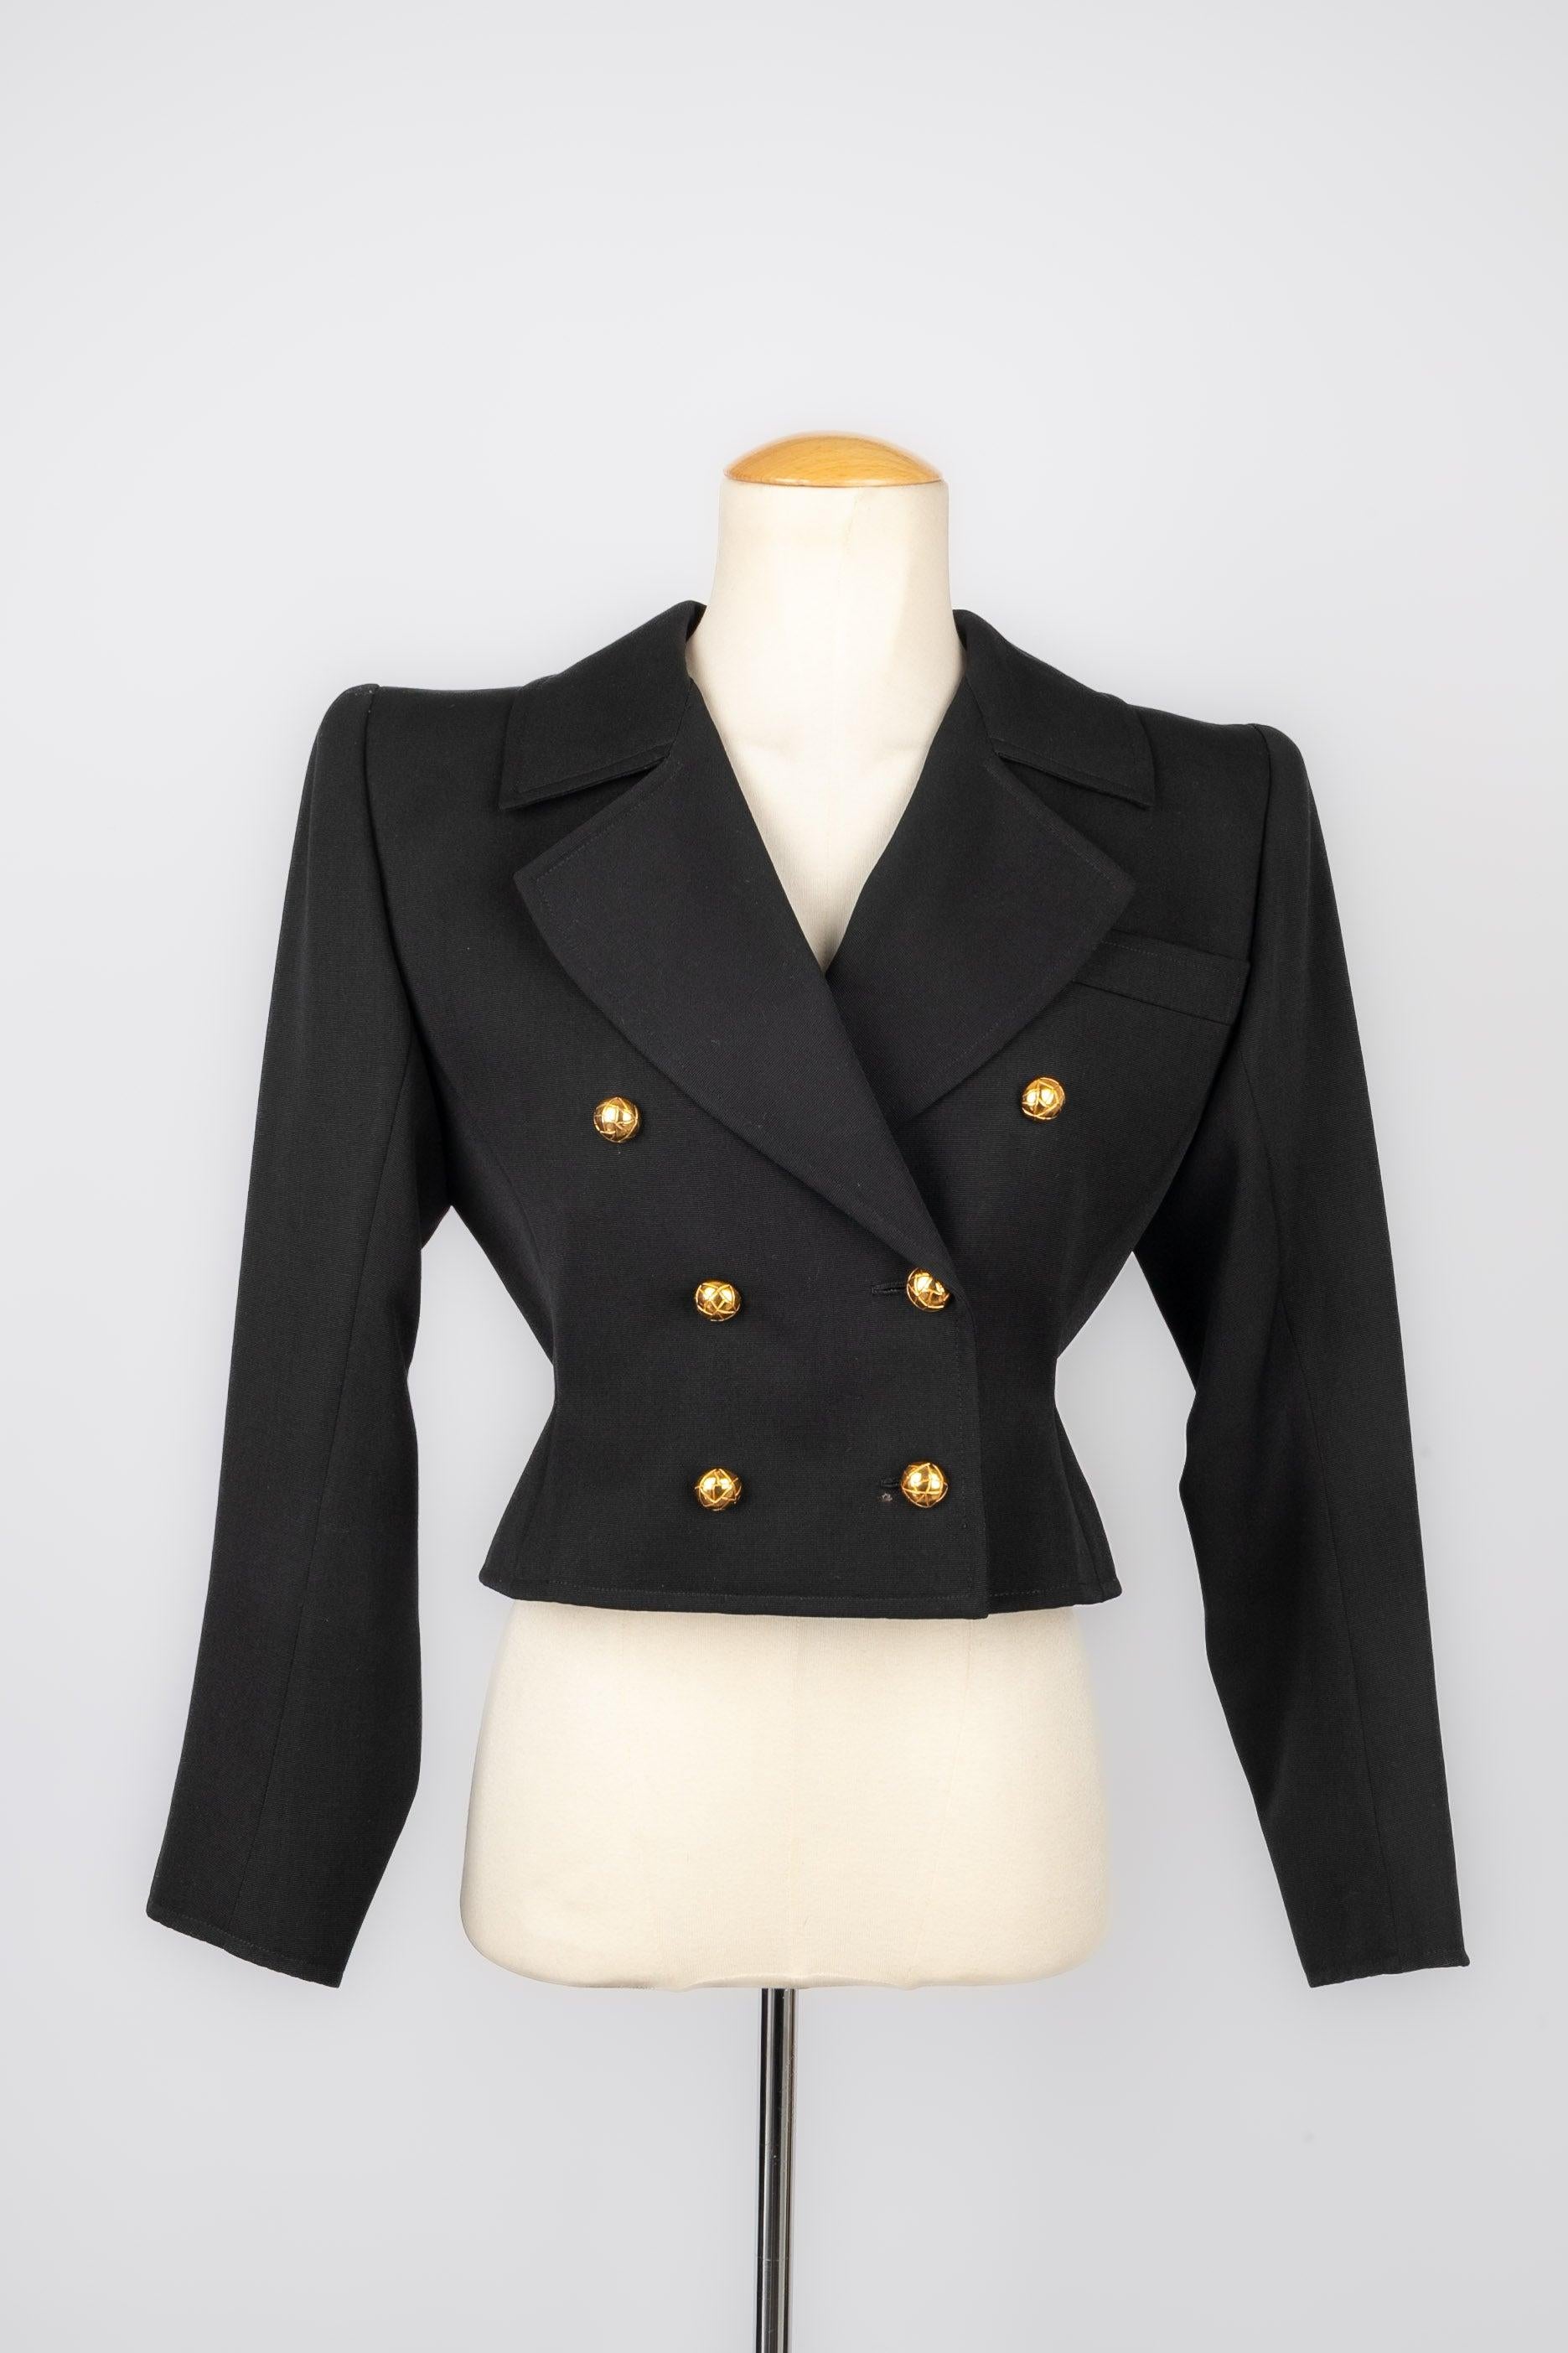 Yves Saint Laurent Black Skirt Suit Enlivened with Satin Belt Haute Couture 1